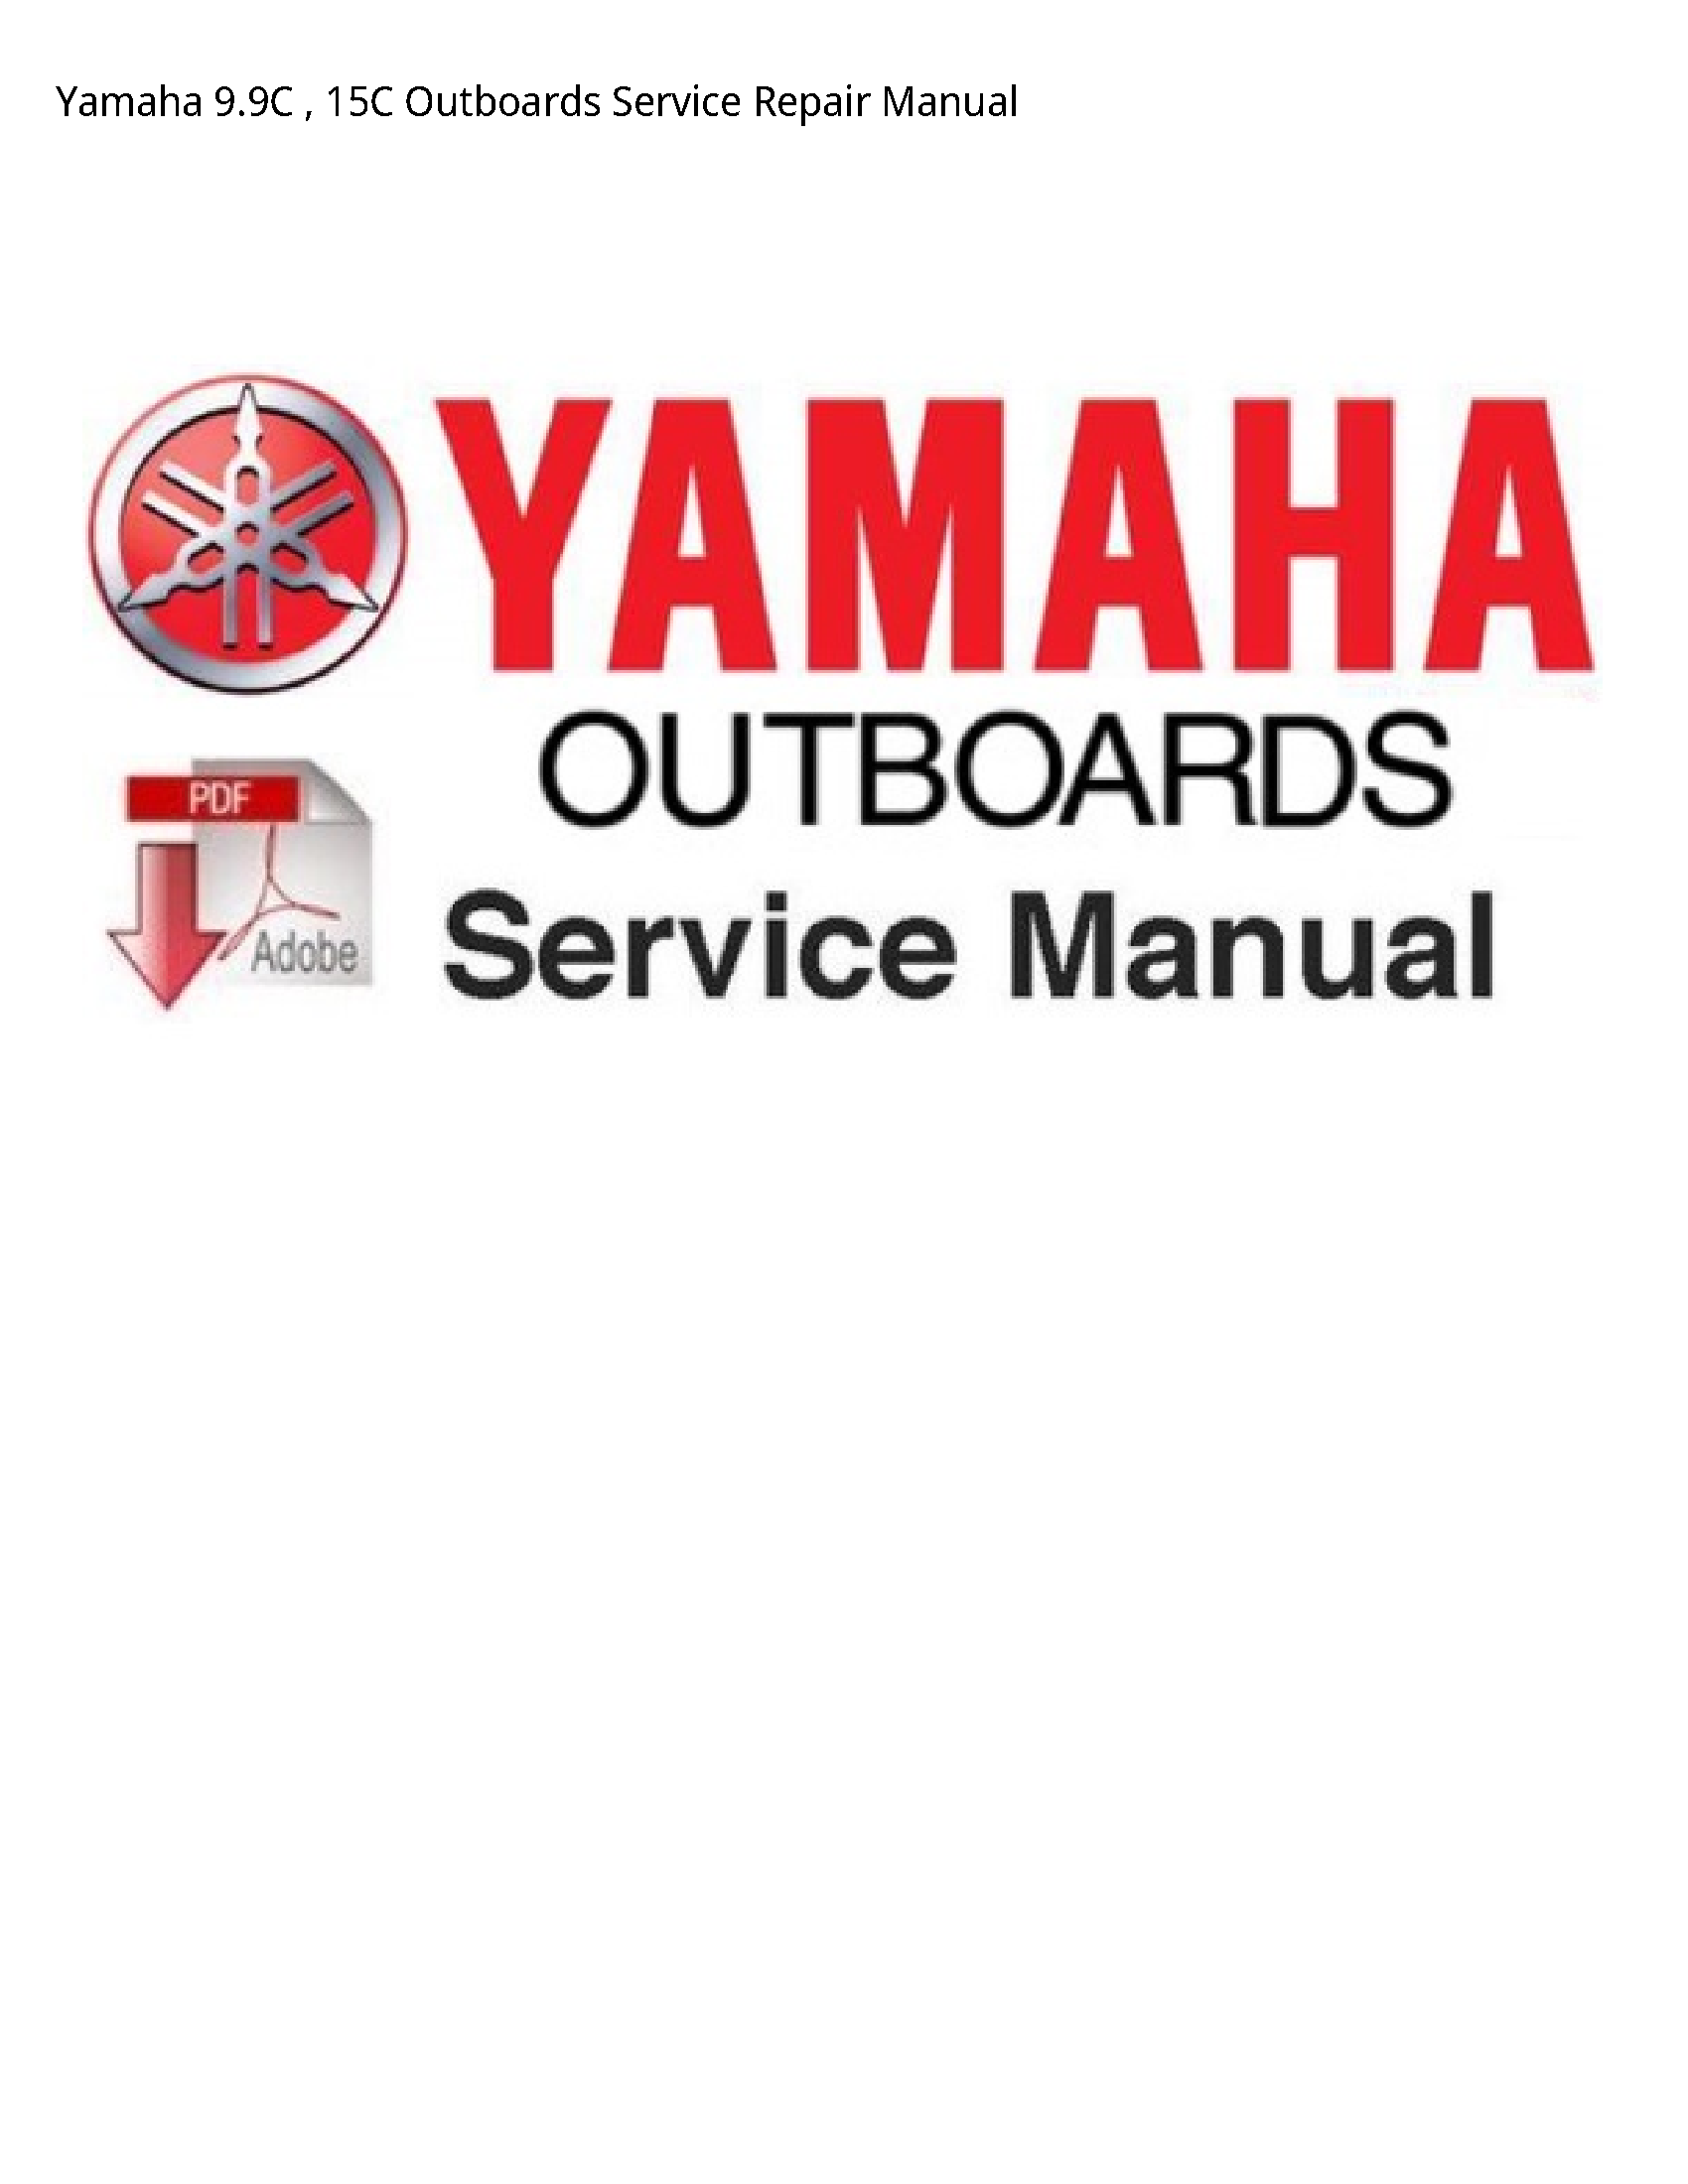 Yamaha 9.9C Outboards manual